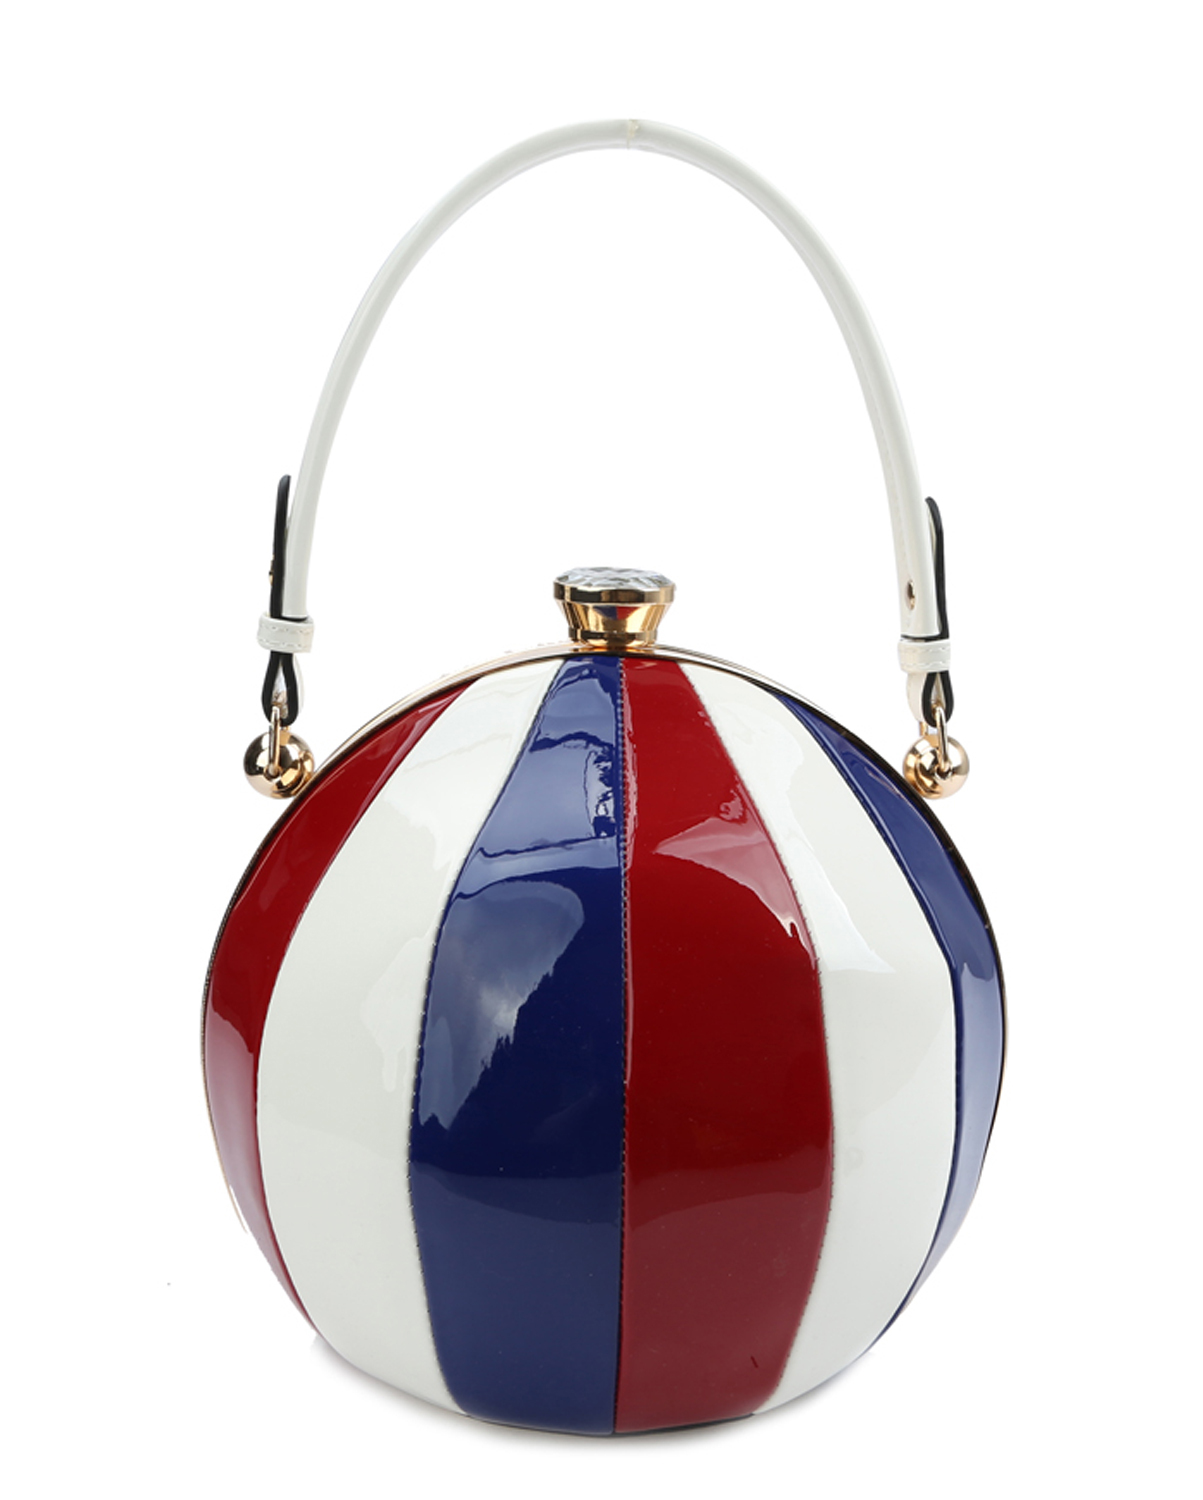 Round Sphere Handbag Beach Ball Purse Patriotic 4th of July Red White Blue Bag - Handbags & Purses